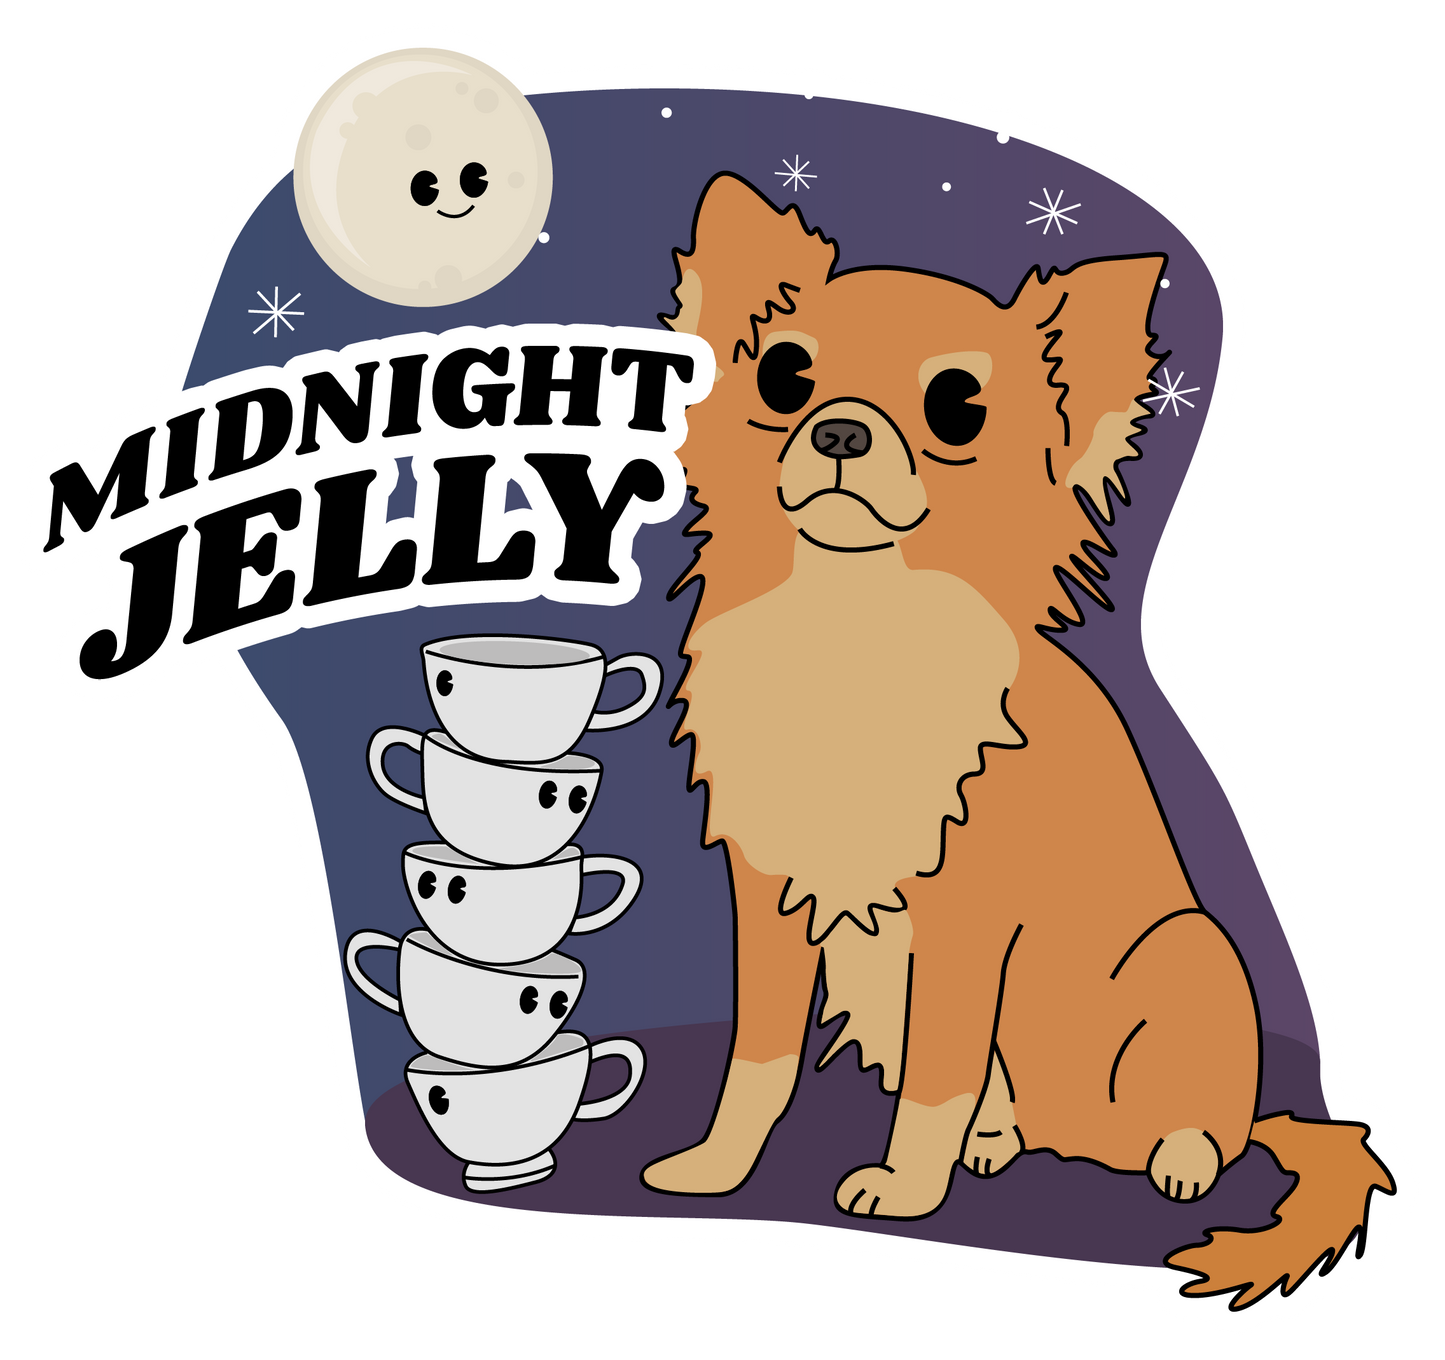 Midnight Jelly